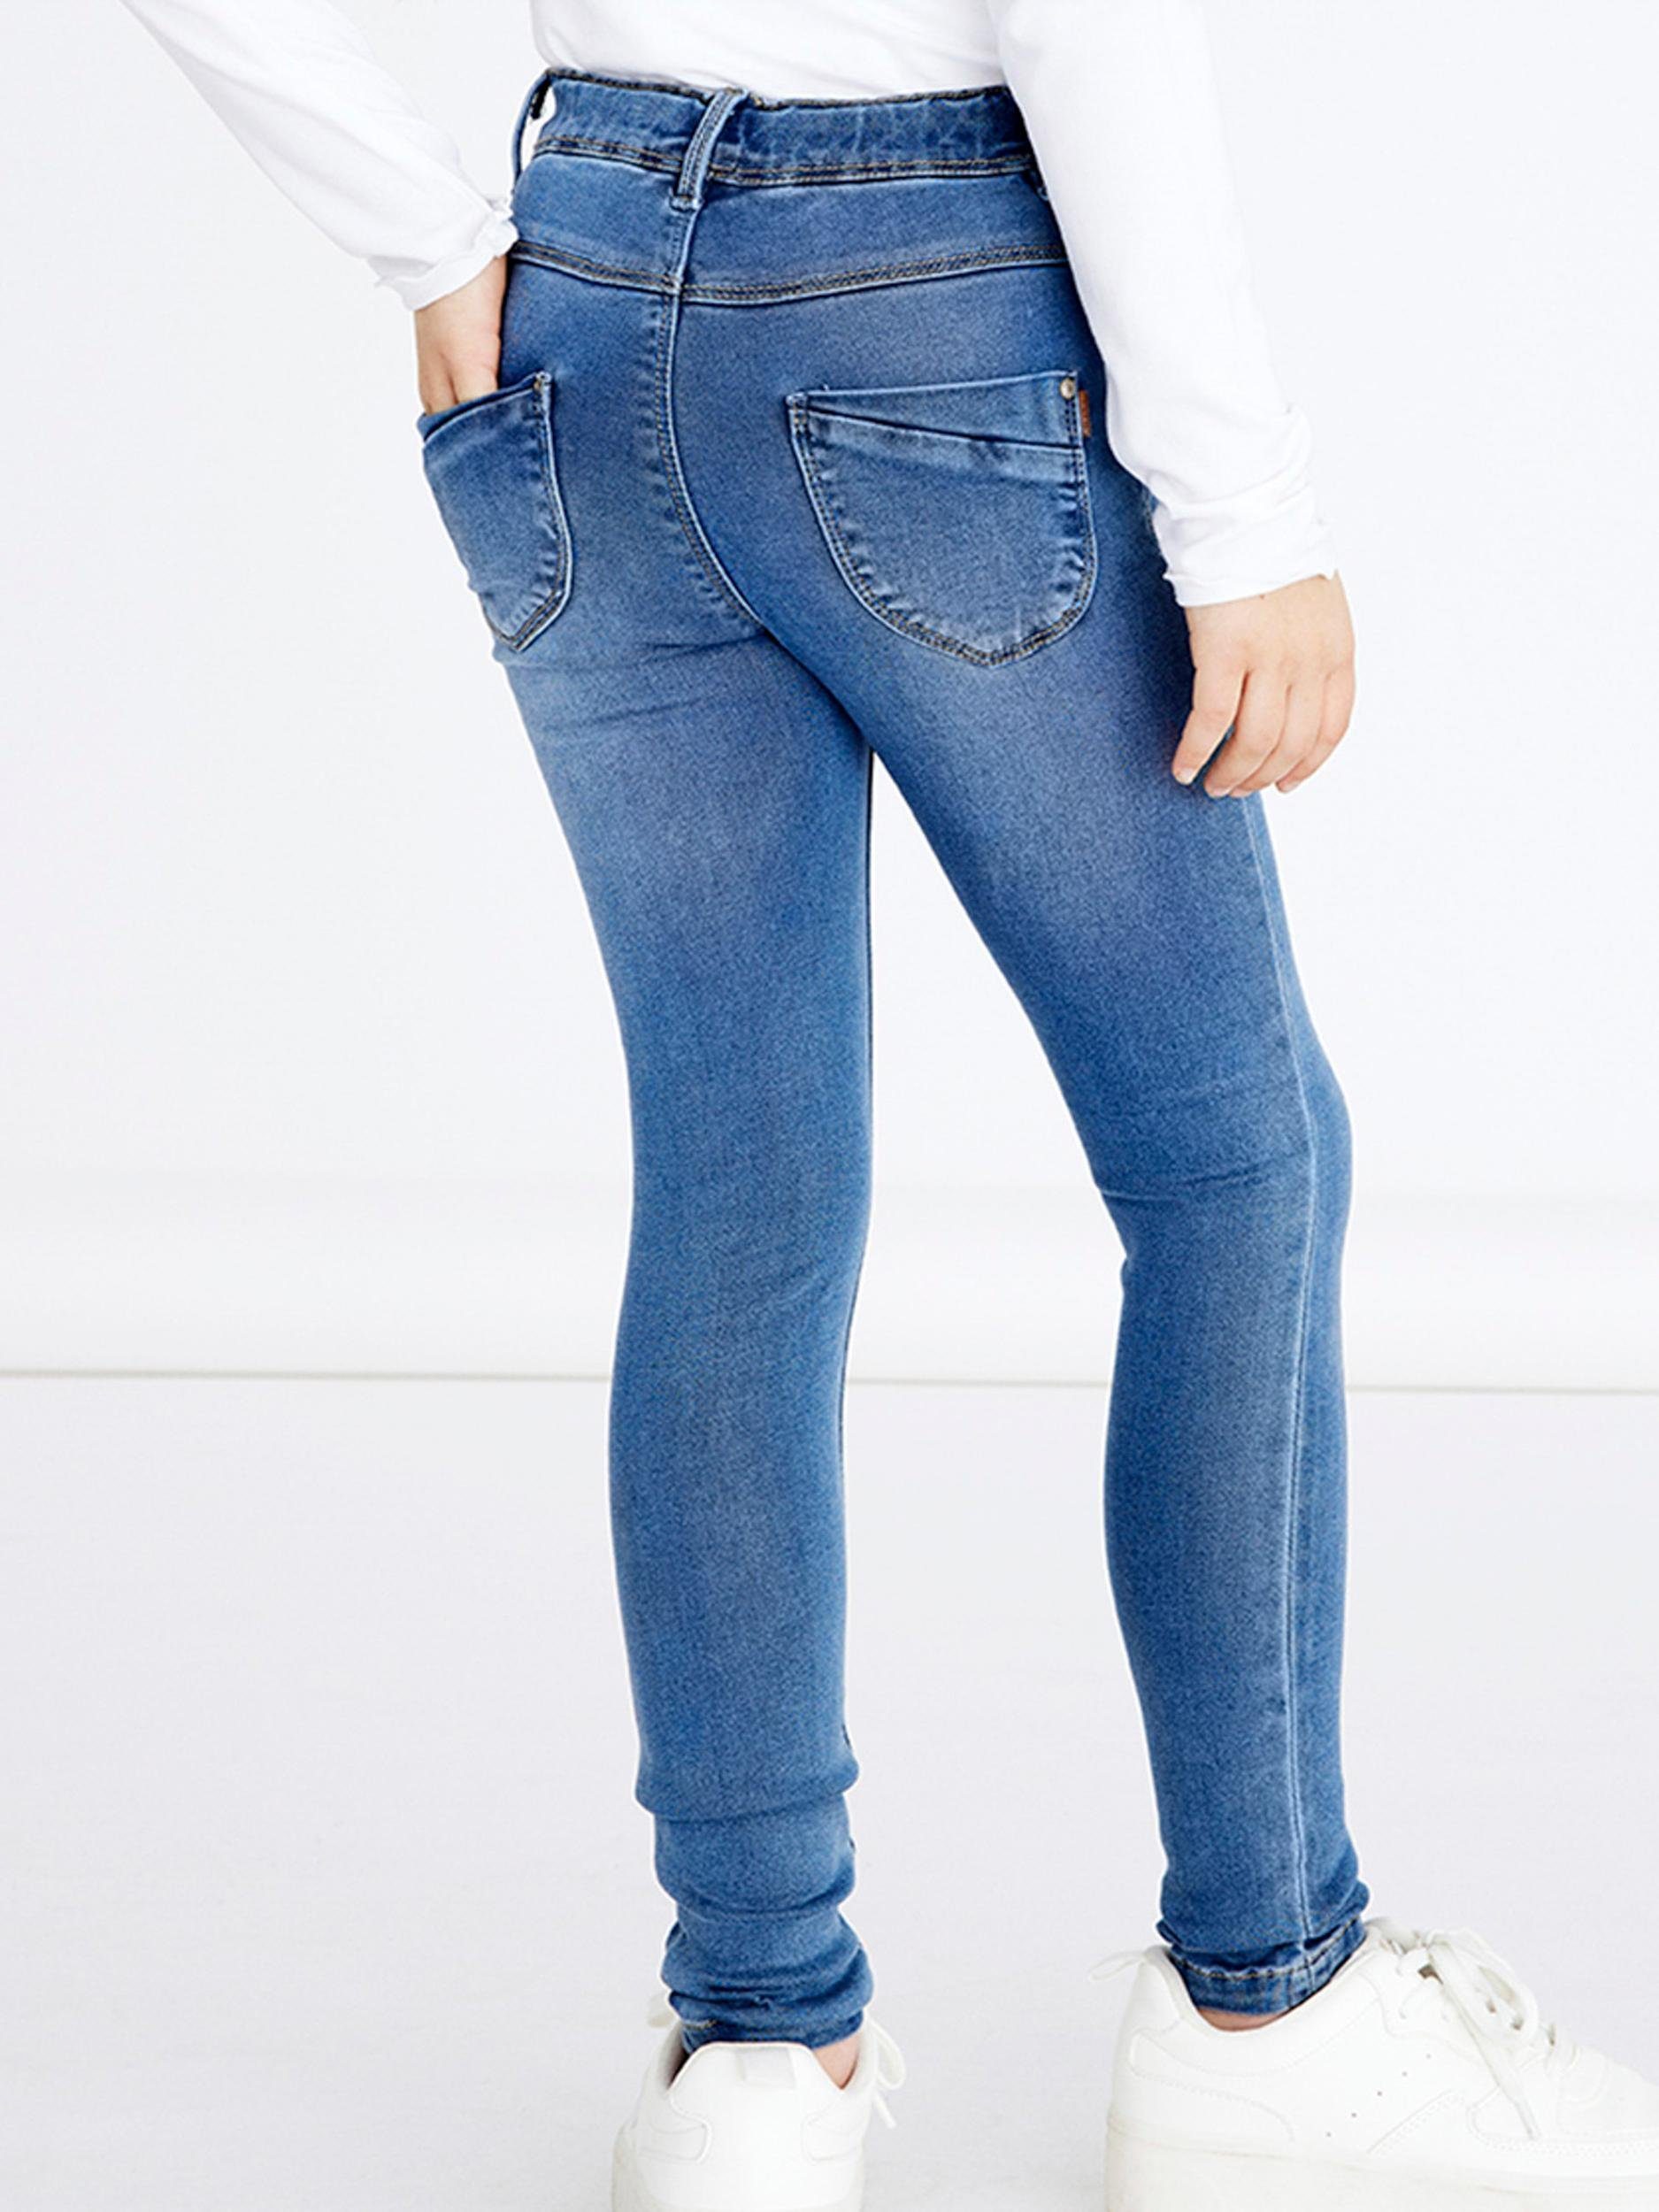 It Name 5-Pocket-Jeans Skinny-Fit in Jeans Mädchen